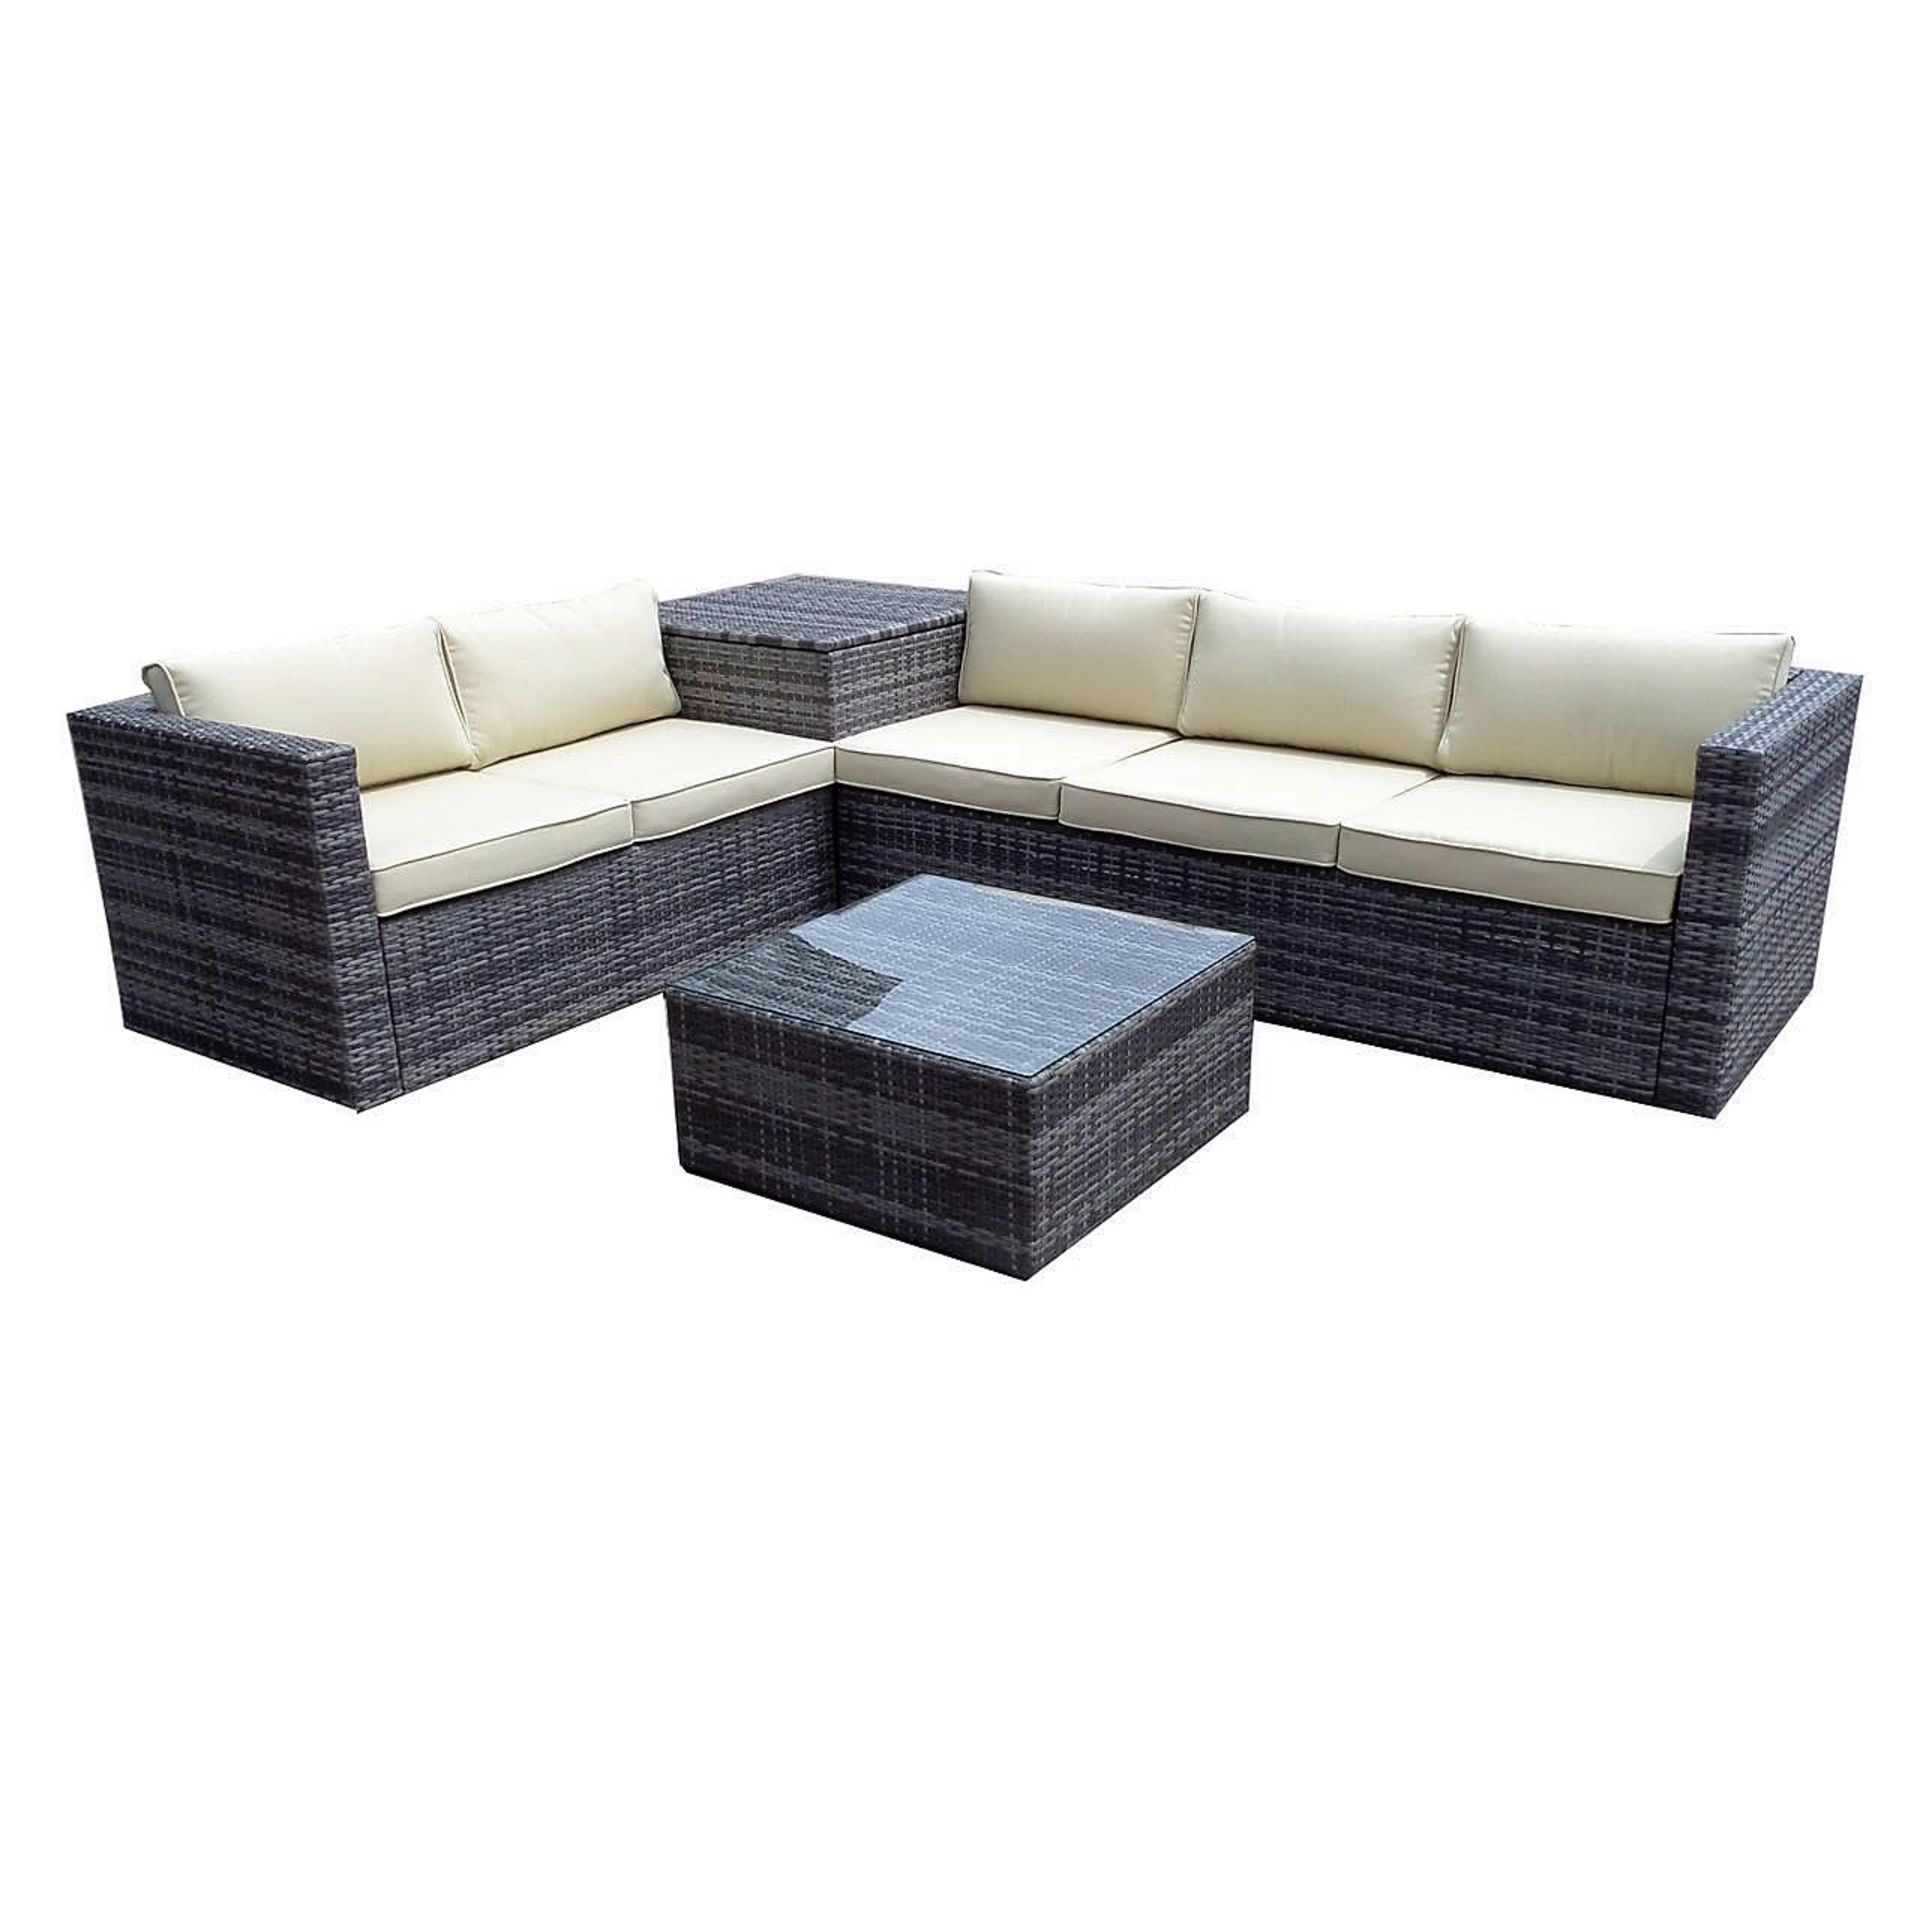 New Zante Corner Sofa Sets Complete with Corner Storage Box for Cushions